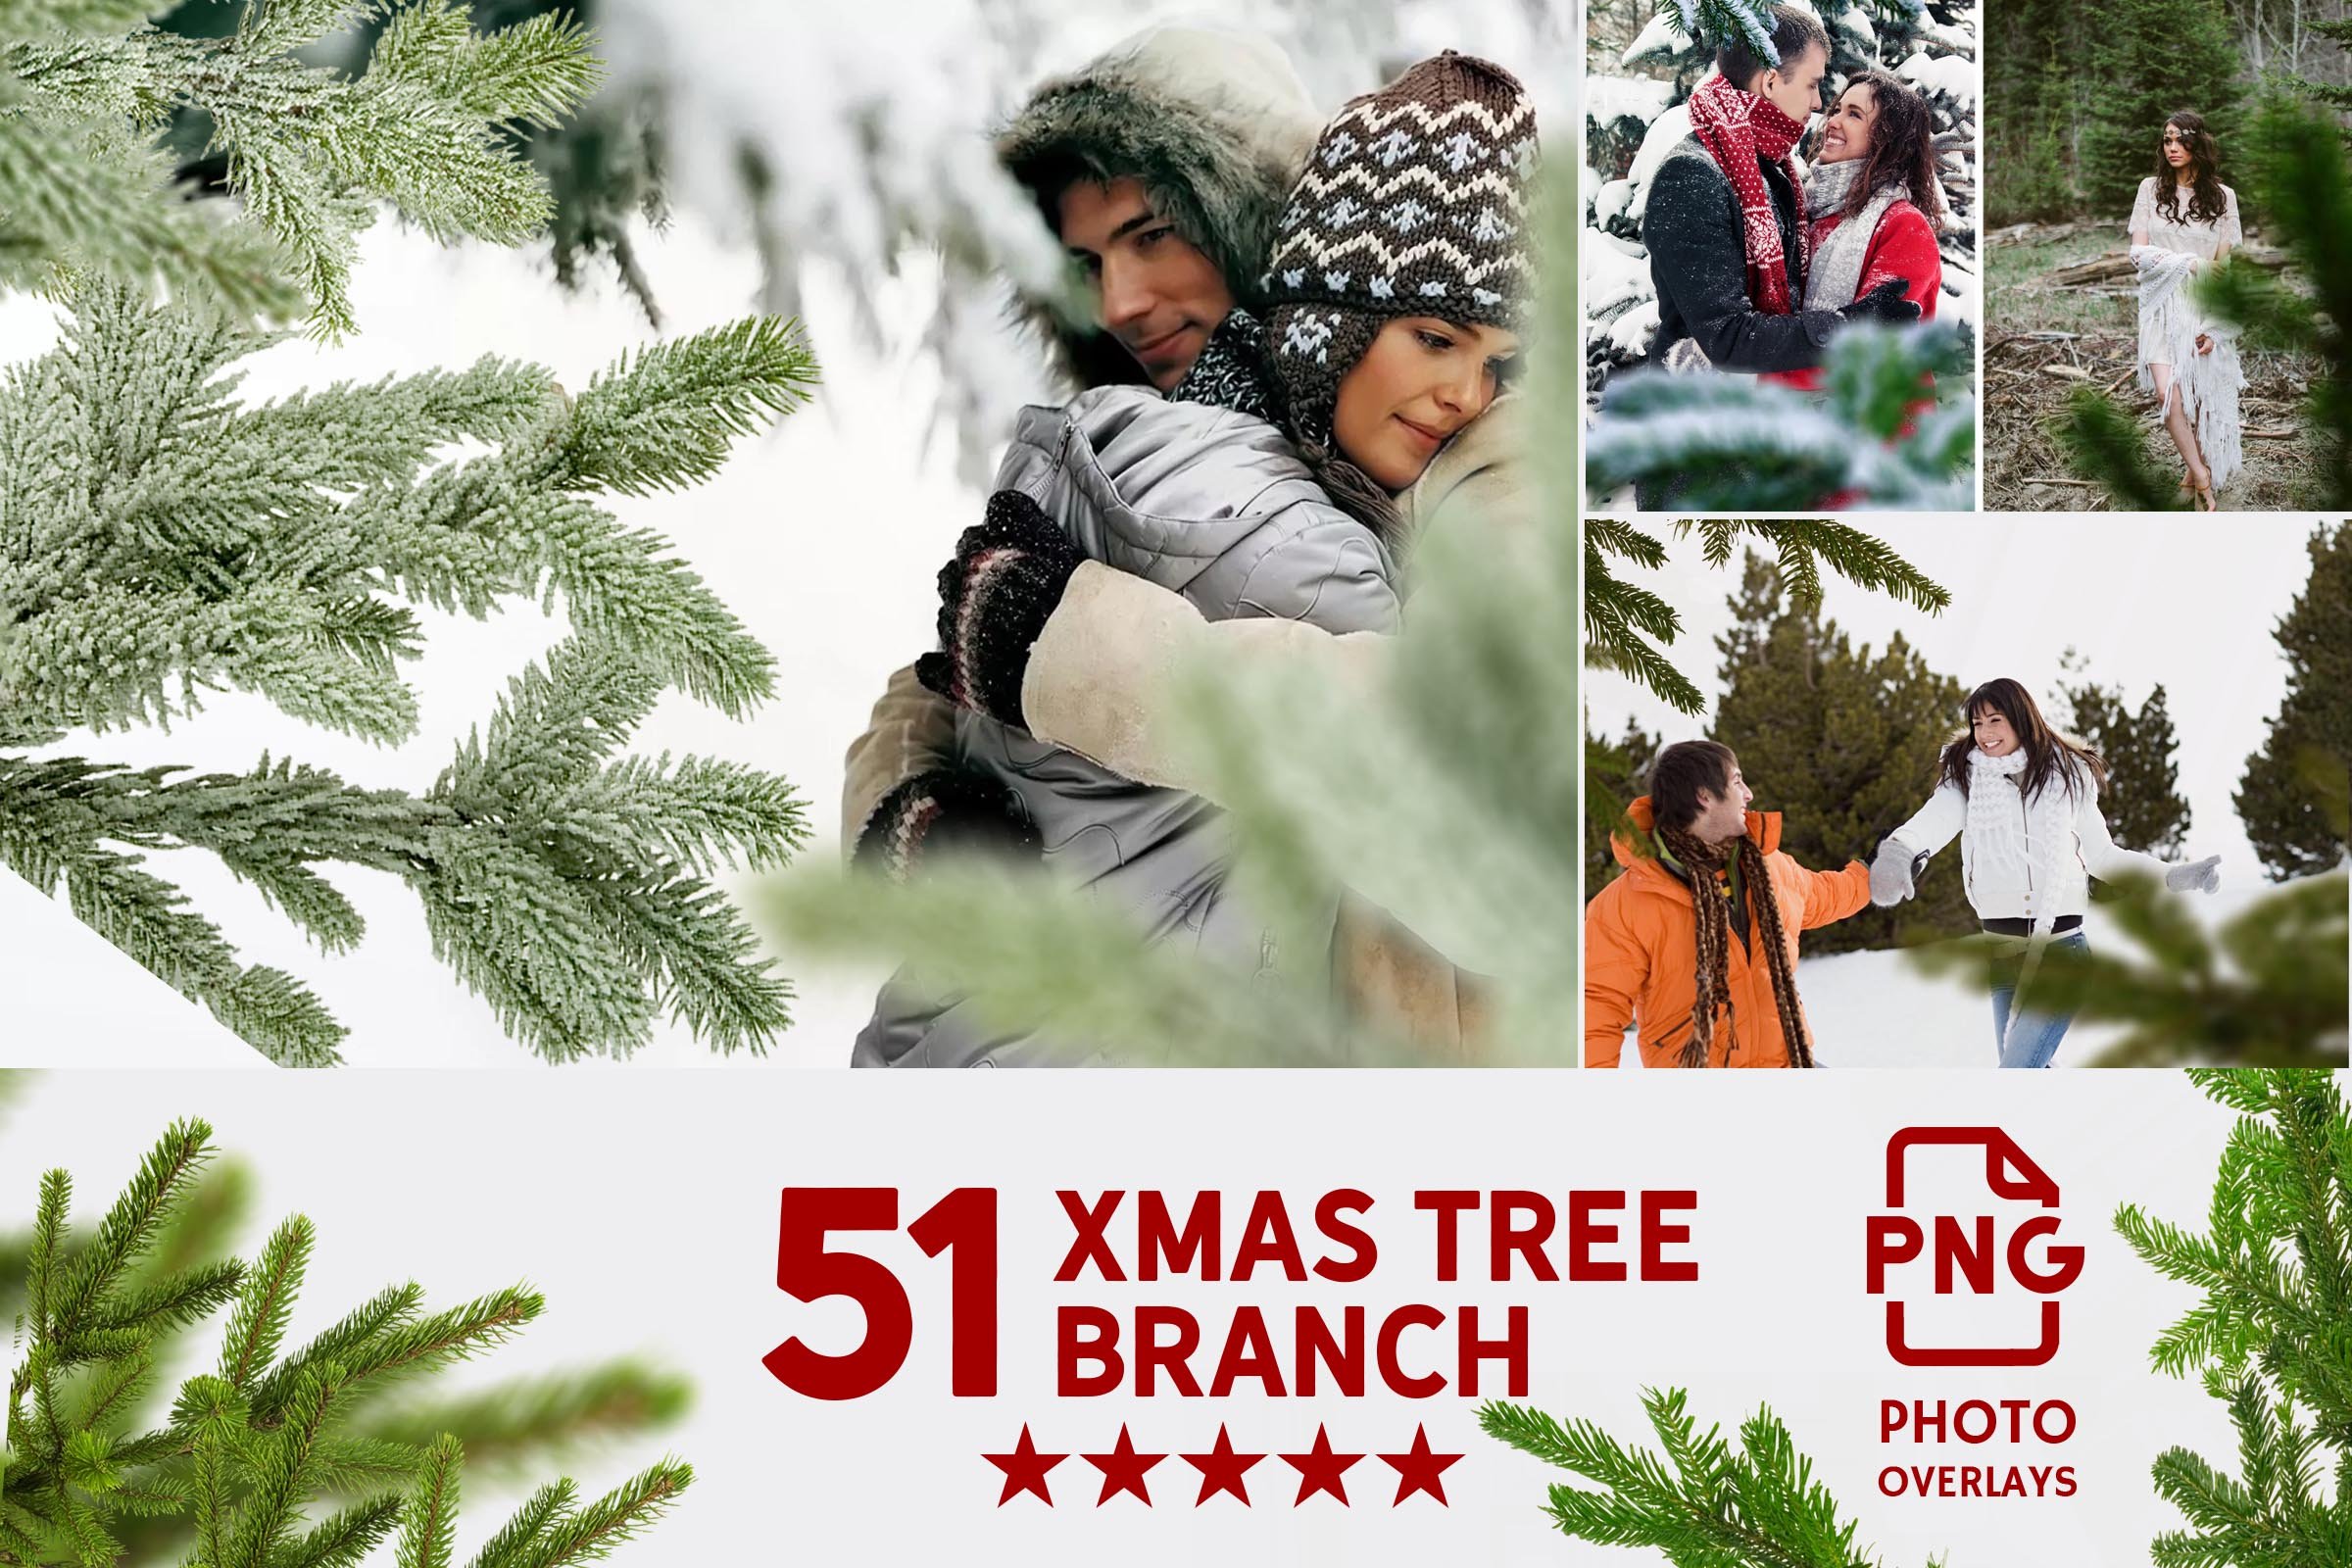 020 pro. 51 christmas tree branch overlays 9